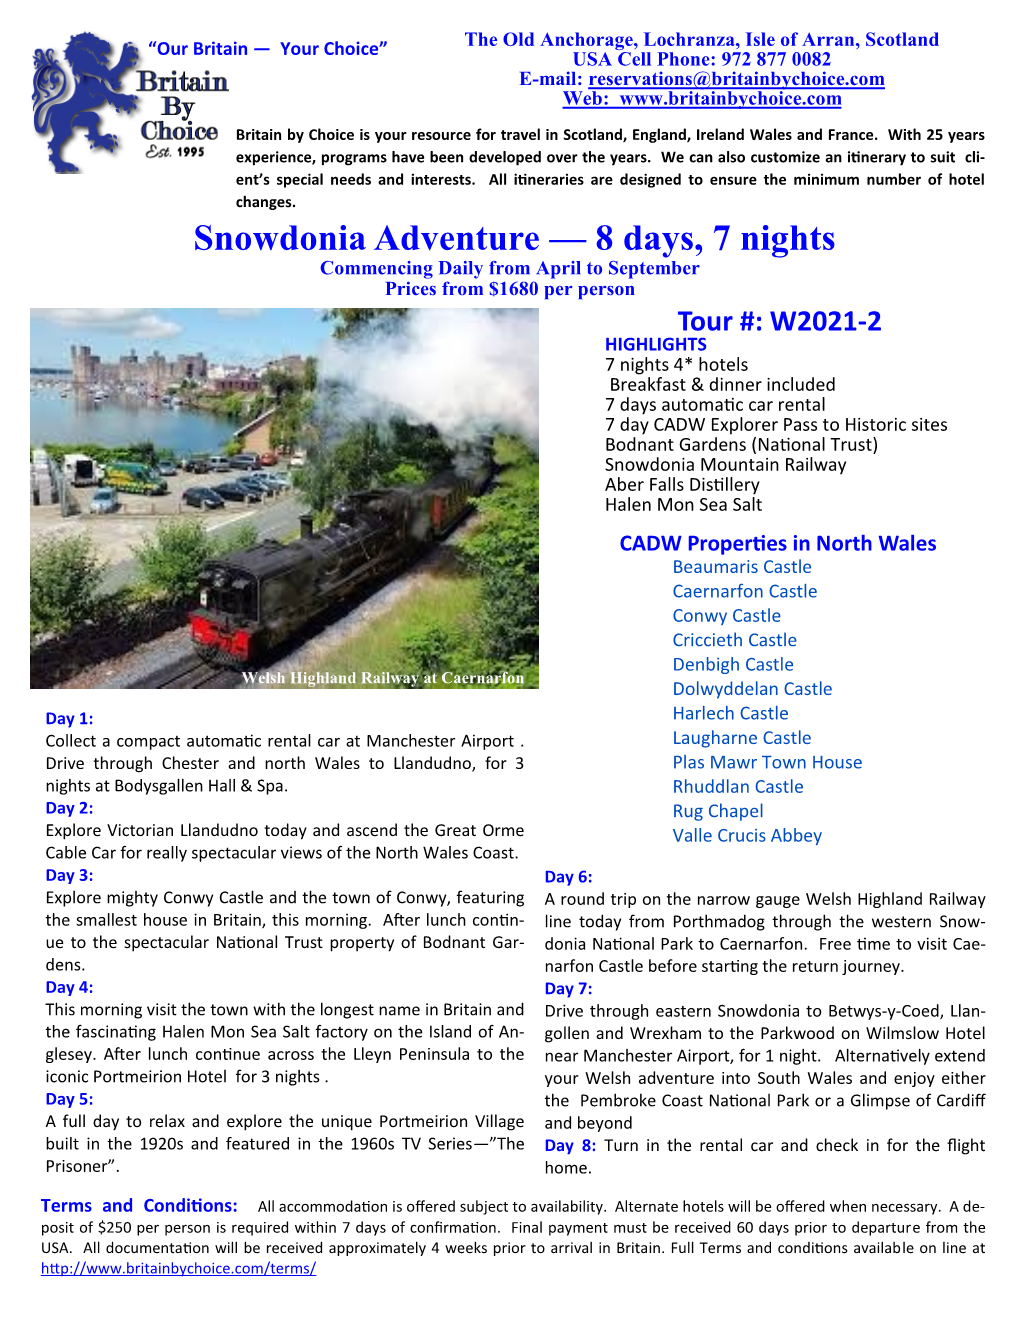 Snowdonia Adventure